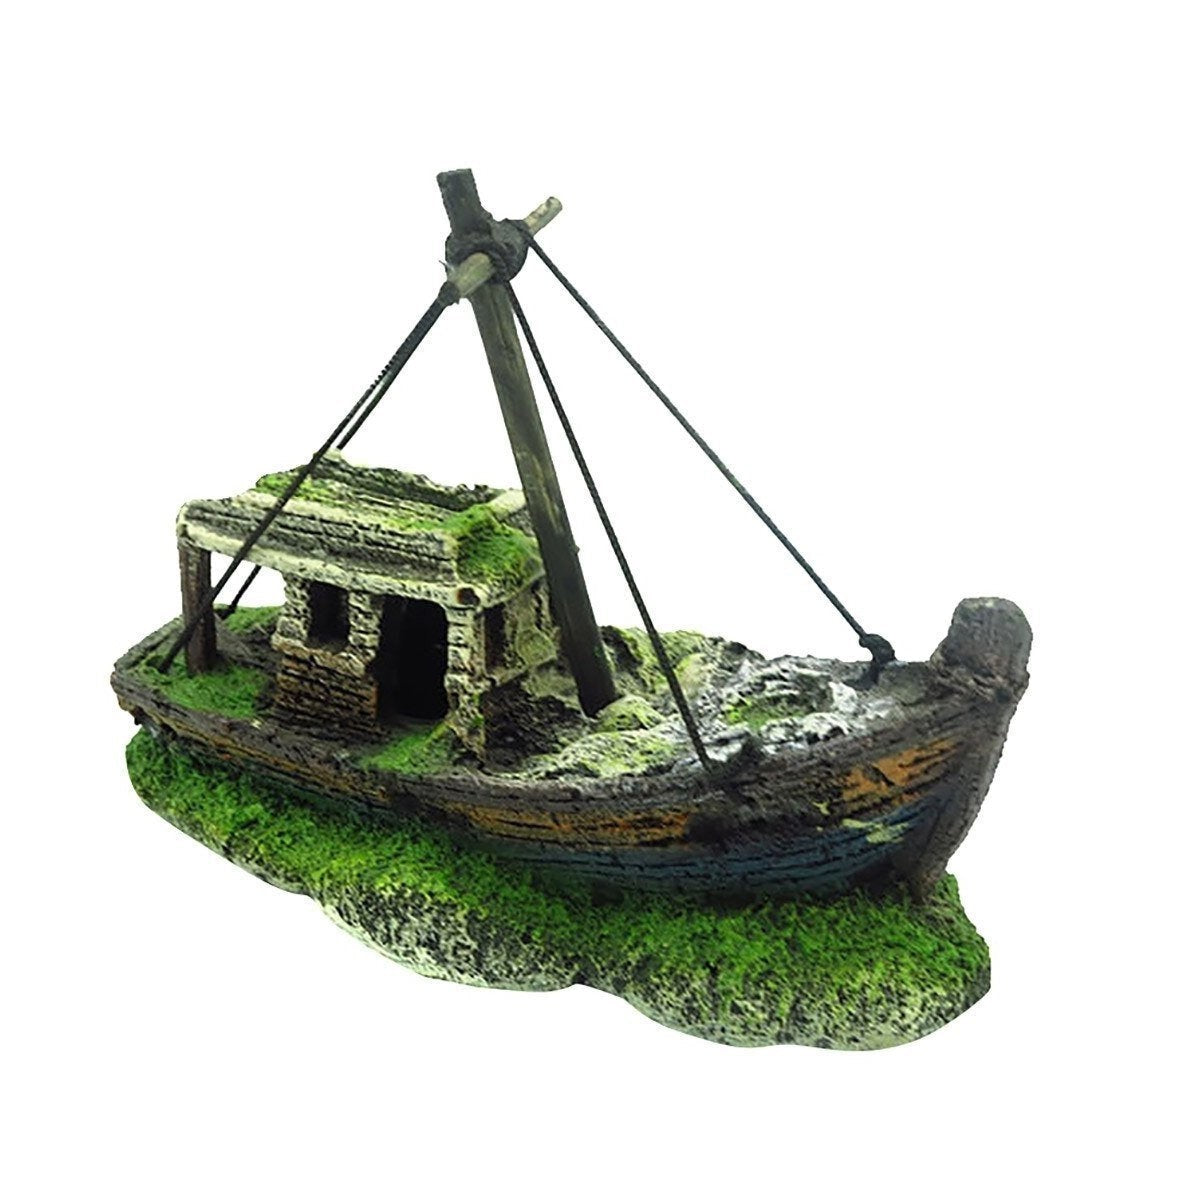 Resin Aquarium Fish Tank Decoration Pirate Shipwreck Ship Wreck Boat B Toys And Educational